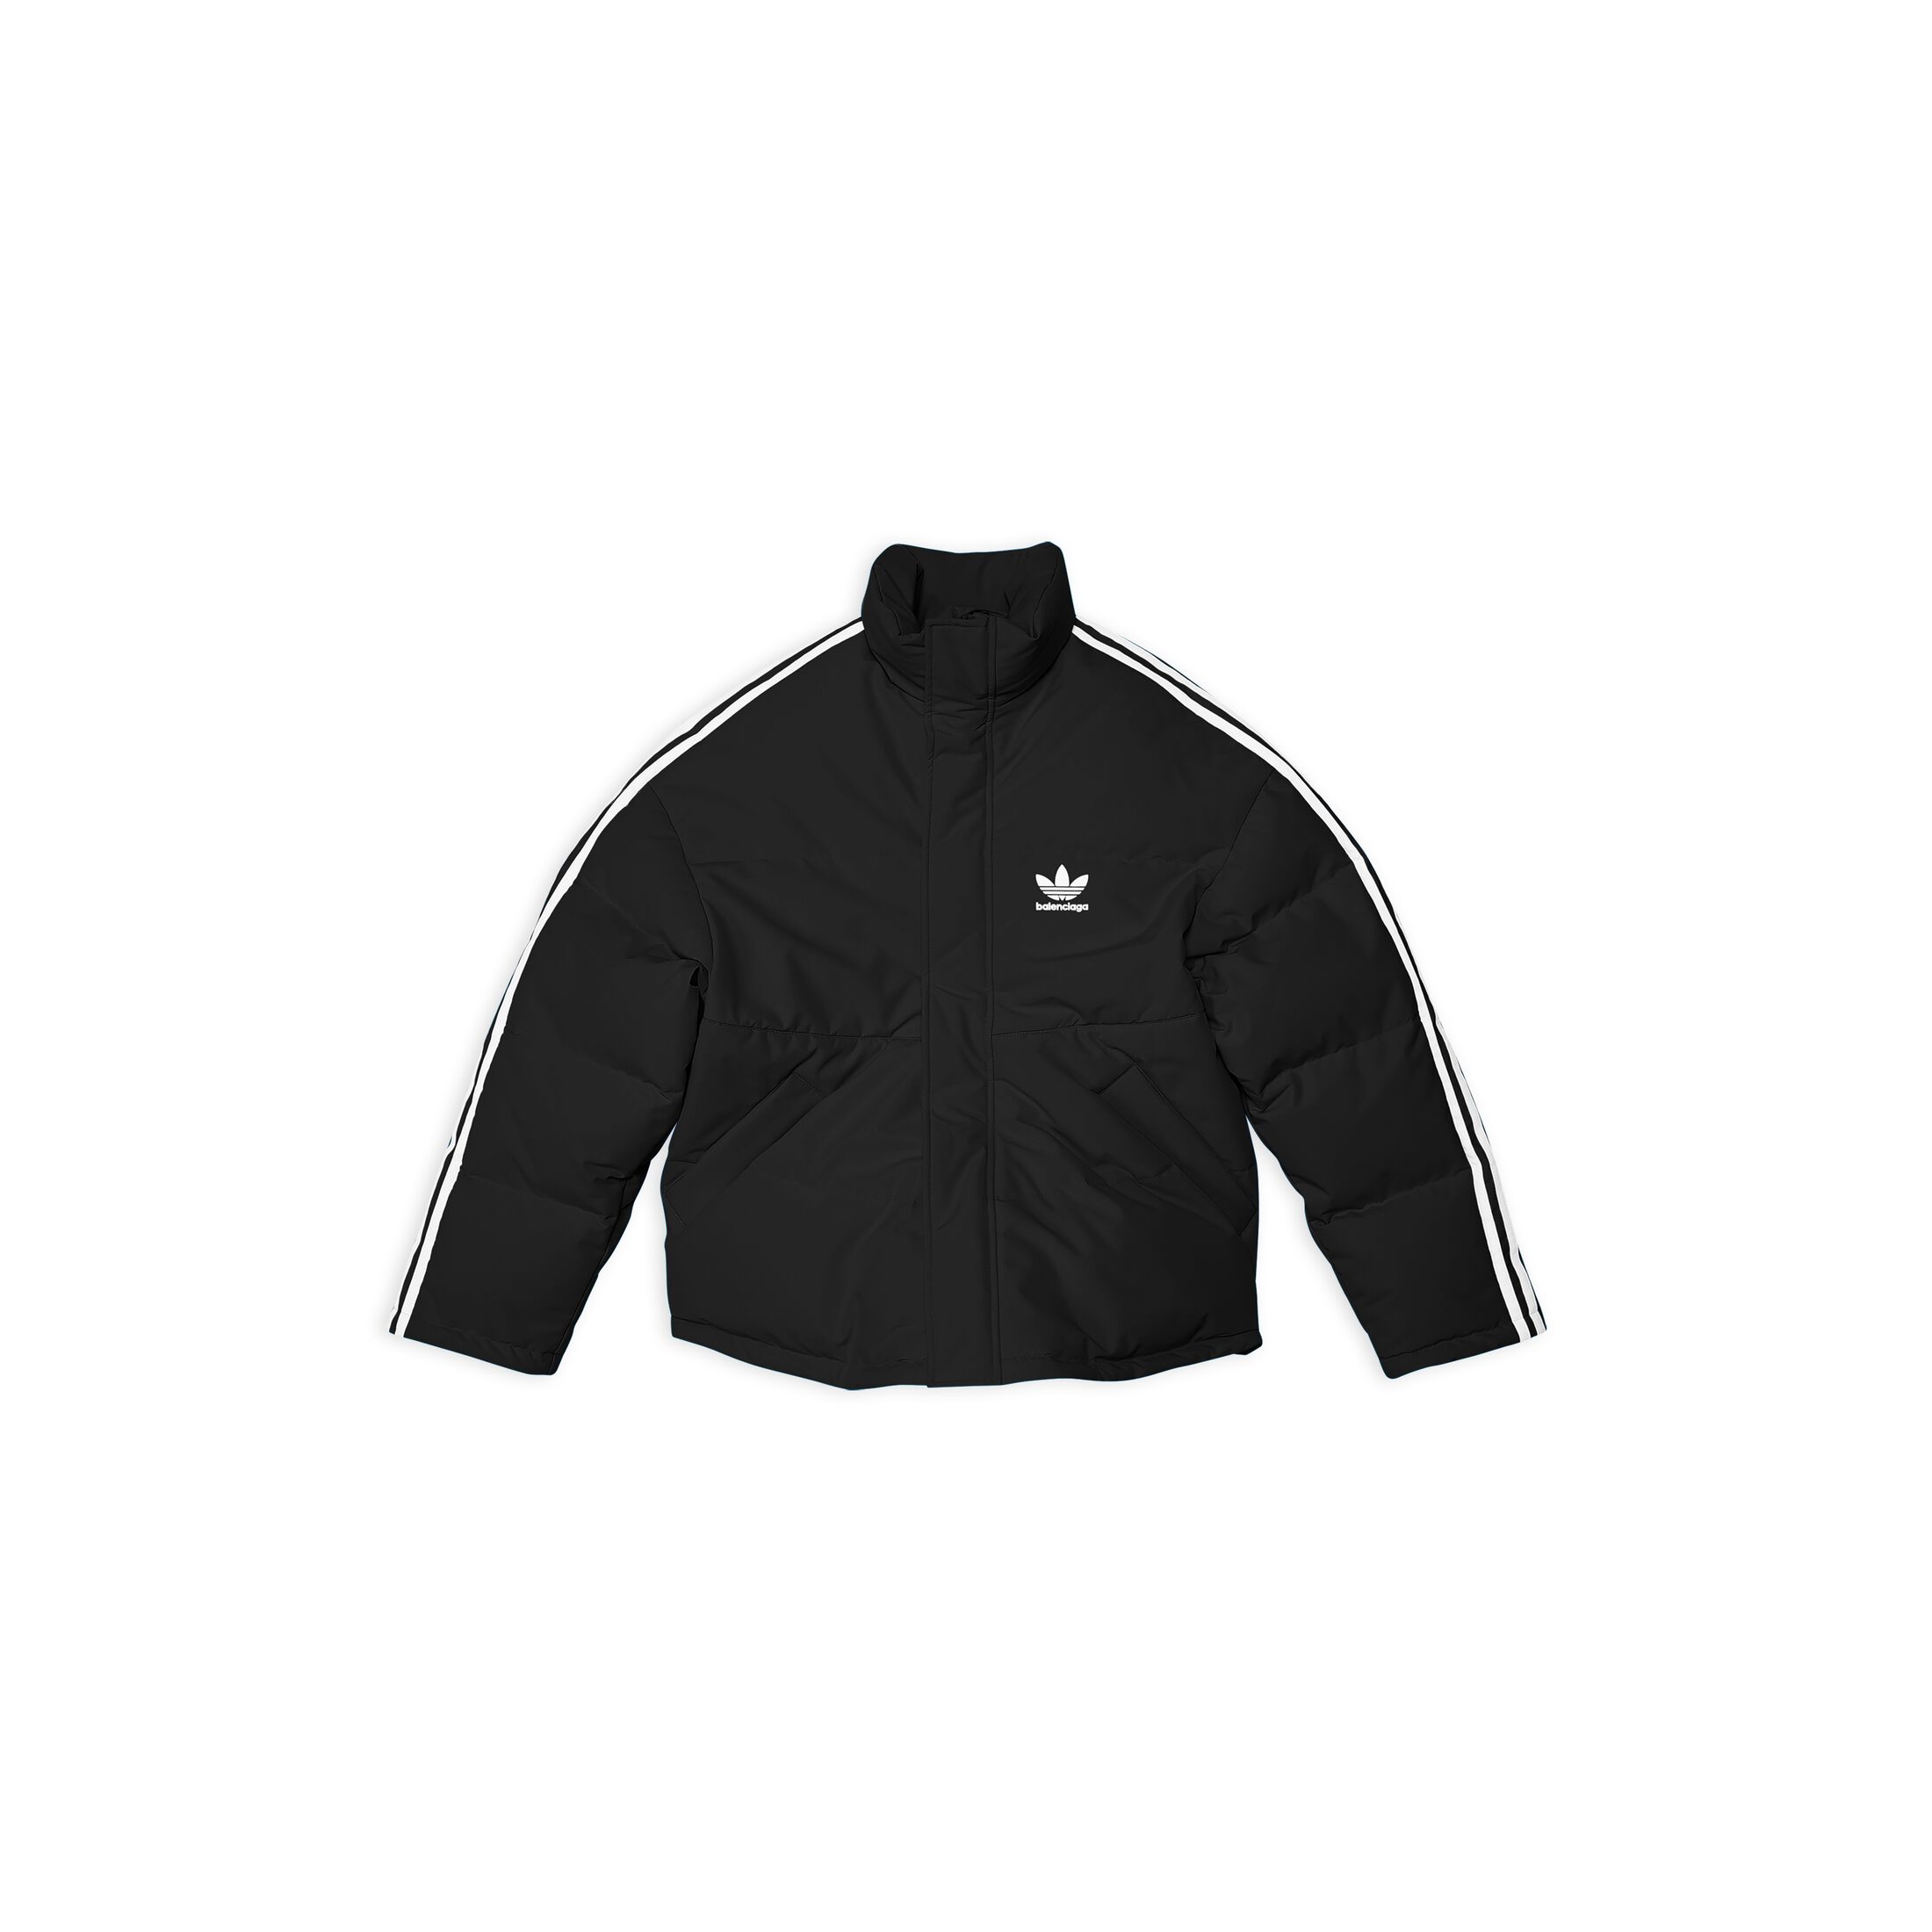 Balenciaga ss21 track suit jacket